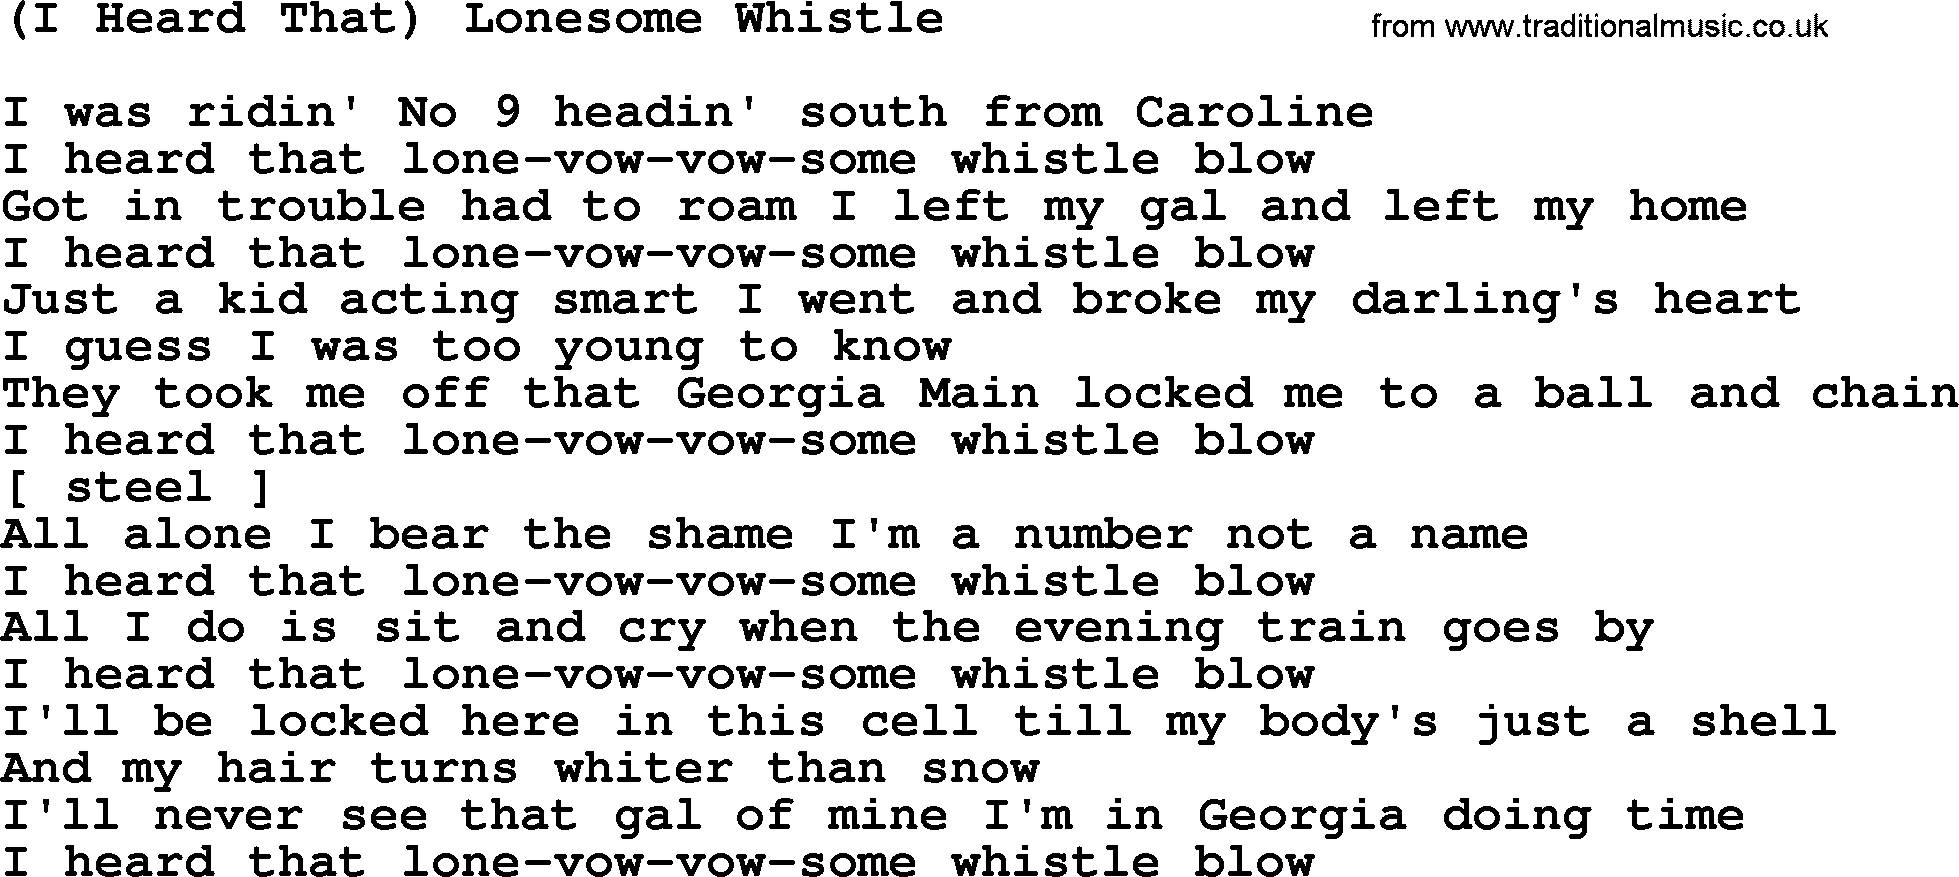 George Jones song: I Heard That Lonesome Whistle, lyrics